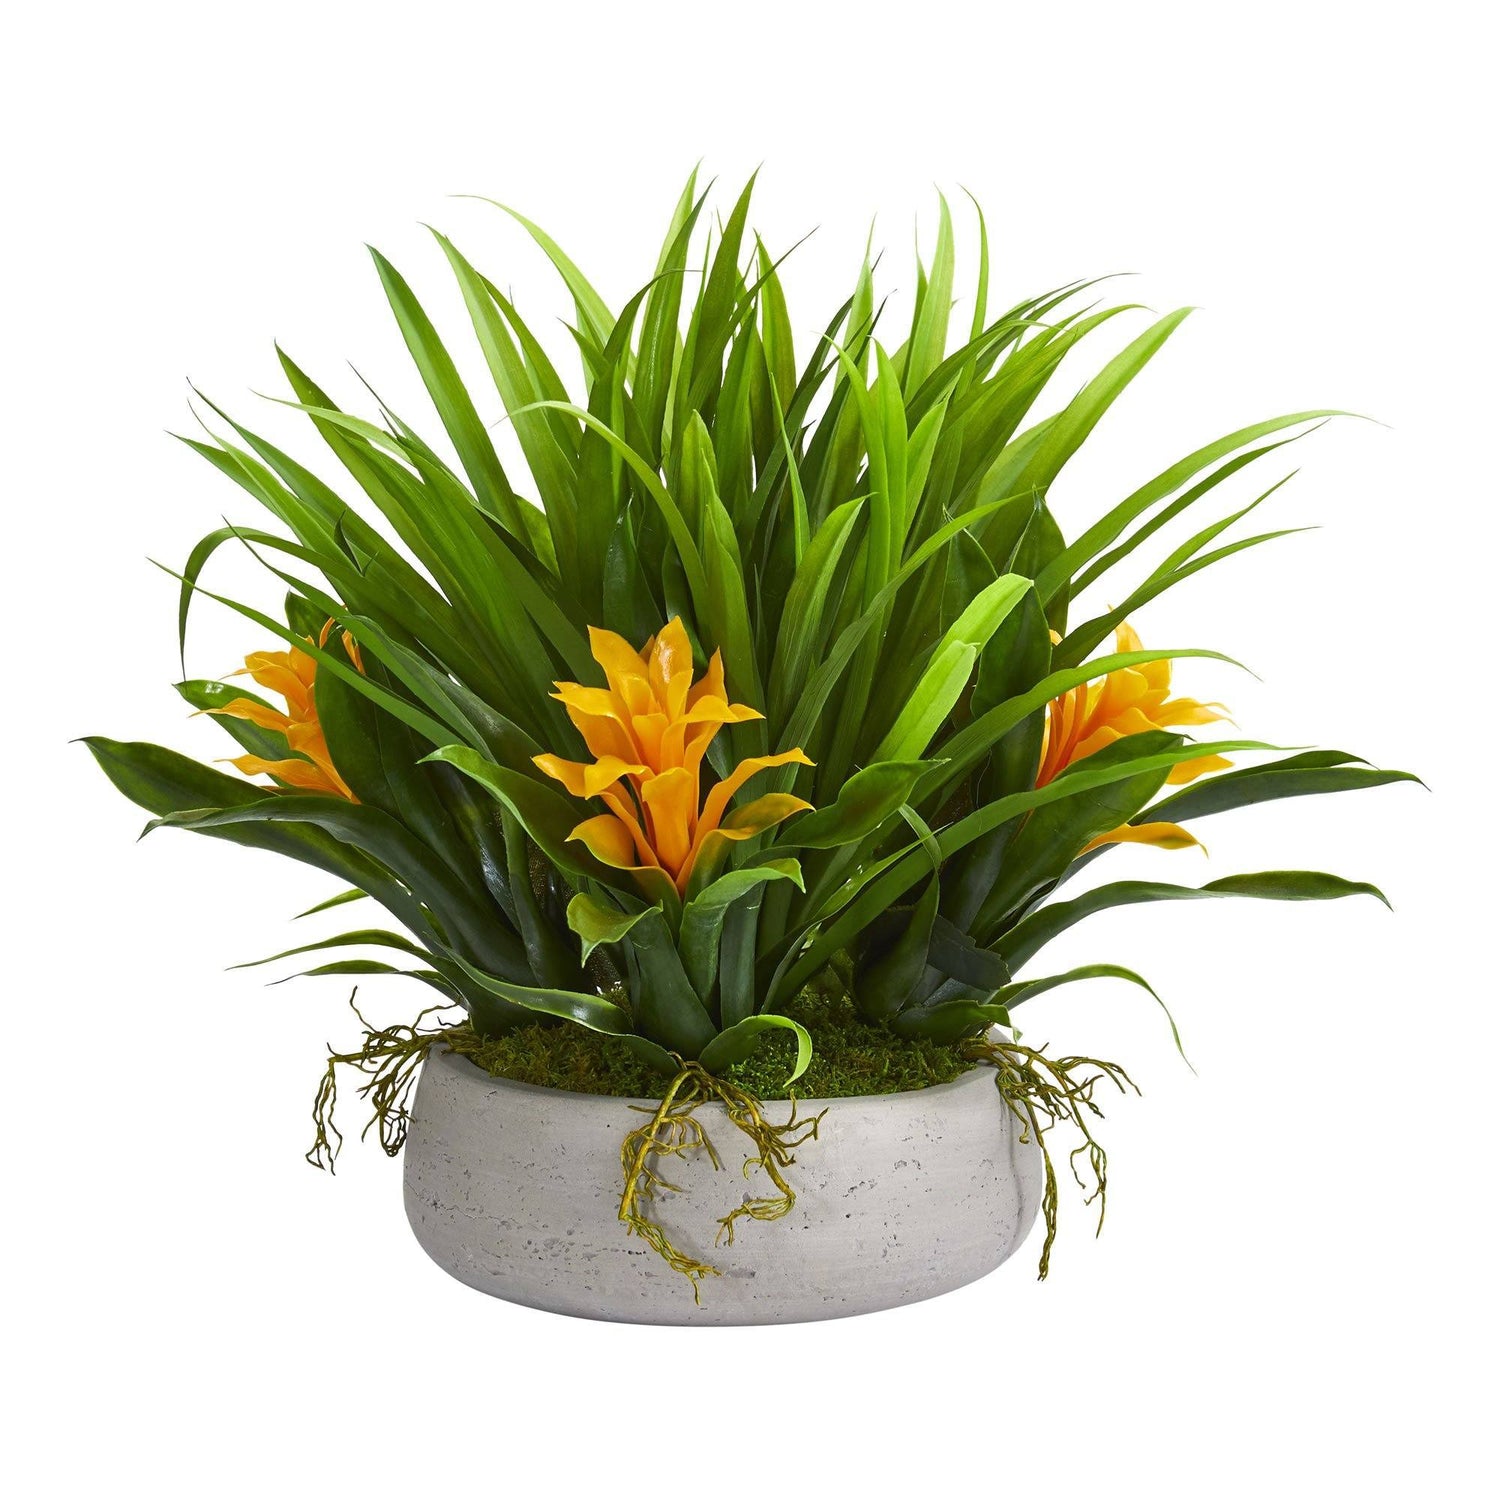 16” Bromeliad & Grass Artificial Plant in Ceramic Vase